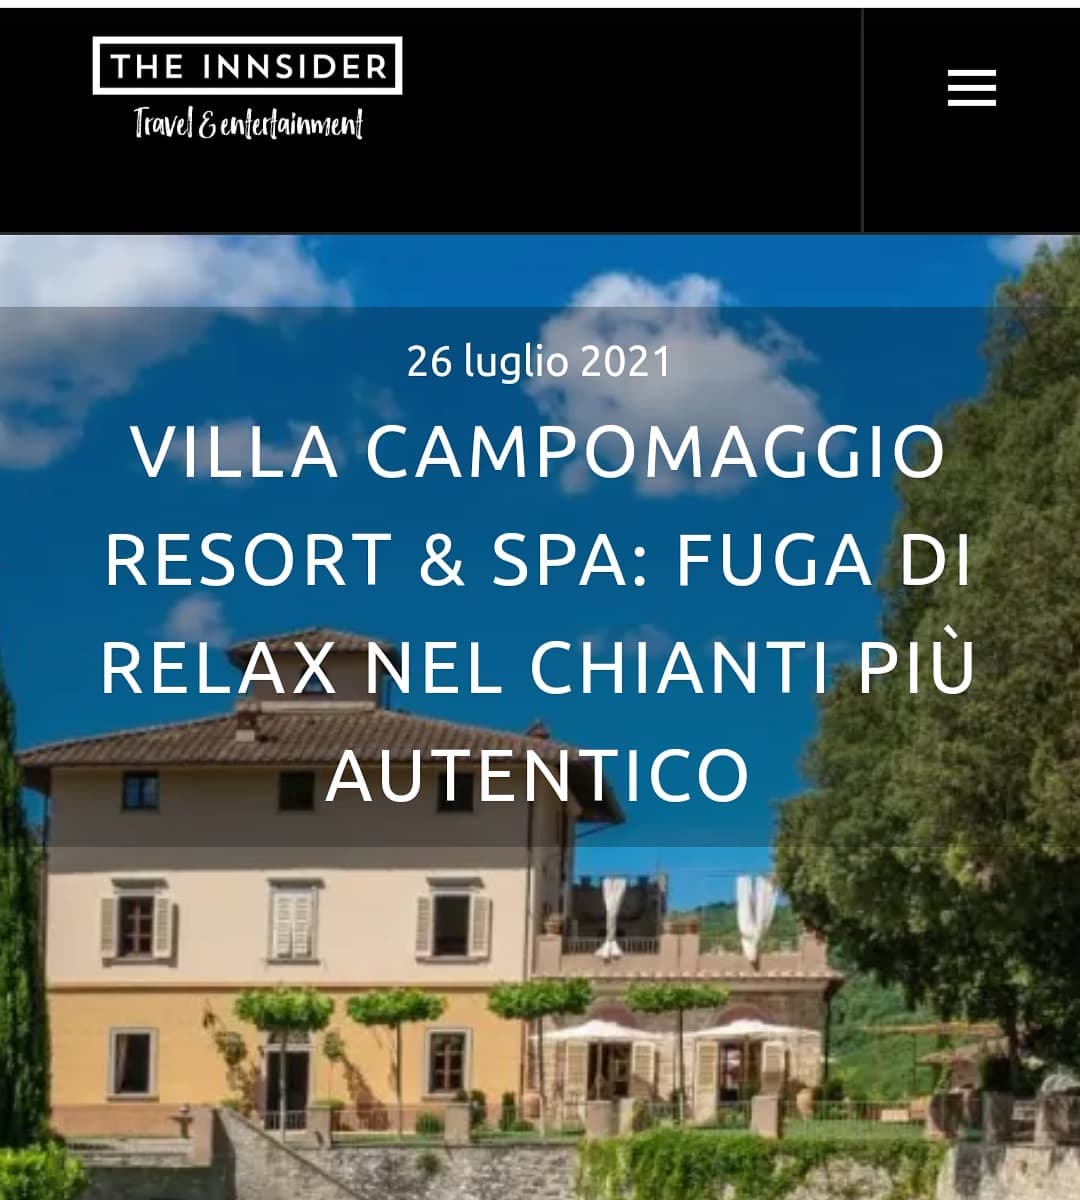 Grazie infinite @the_innsider per questa recensione magnifica! ❤️Al seguente link l'articolo completo:https://theinnsider.wordpress.com/2021/07/26/hotel-villa-campomaggio-resort-spa-redda-chianti-toscana-lusso/#chianticlassico #tuscanylovers #tuscanyfood #recensioni #tuscanygram #gaytravel
#luxurymoments #relaxtime #gaytravelblog #toscanadascoprire